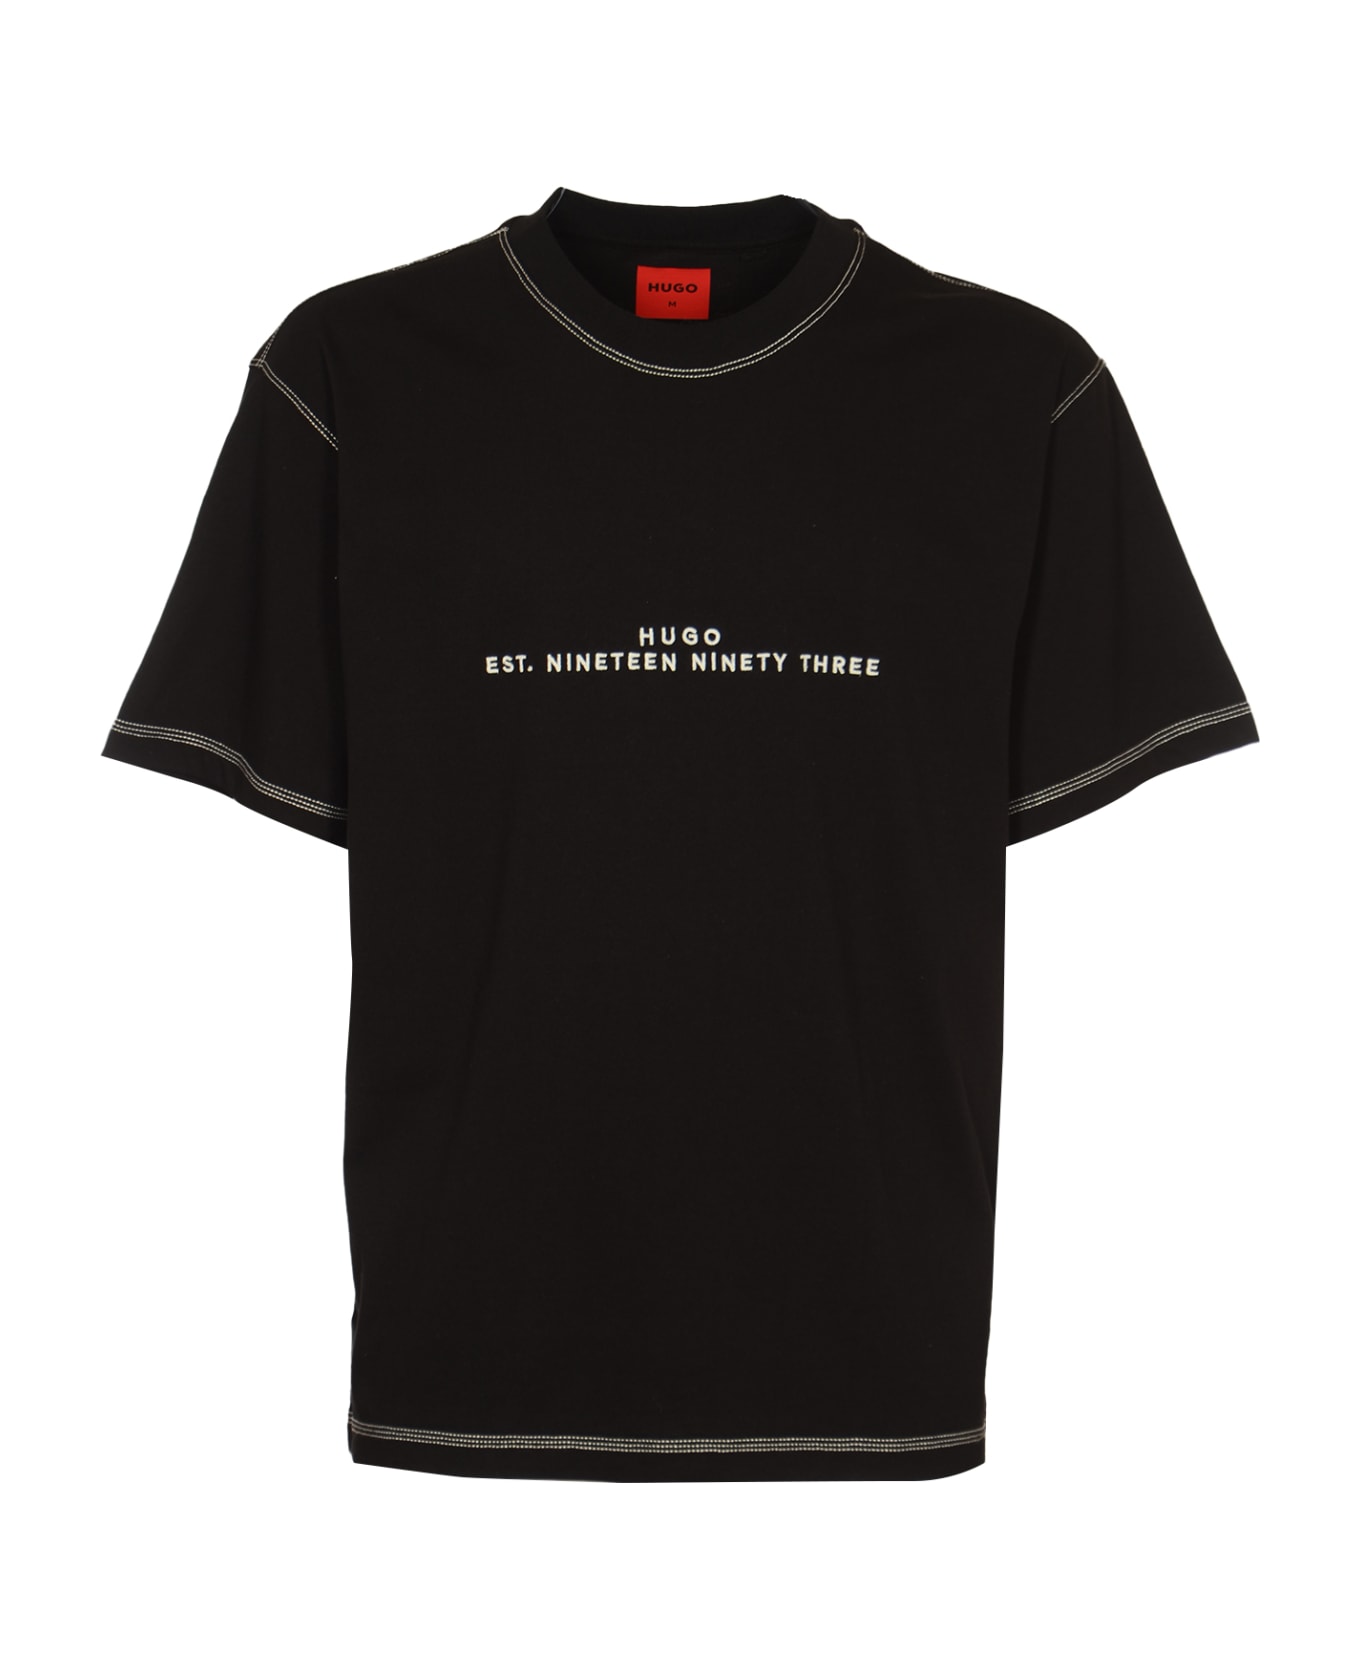 Hugo Boss Nineteen Ninety Three T-shirt - Black シャツ